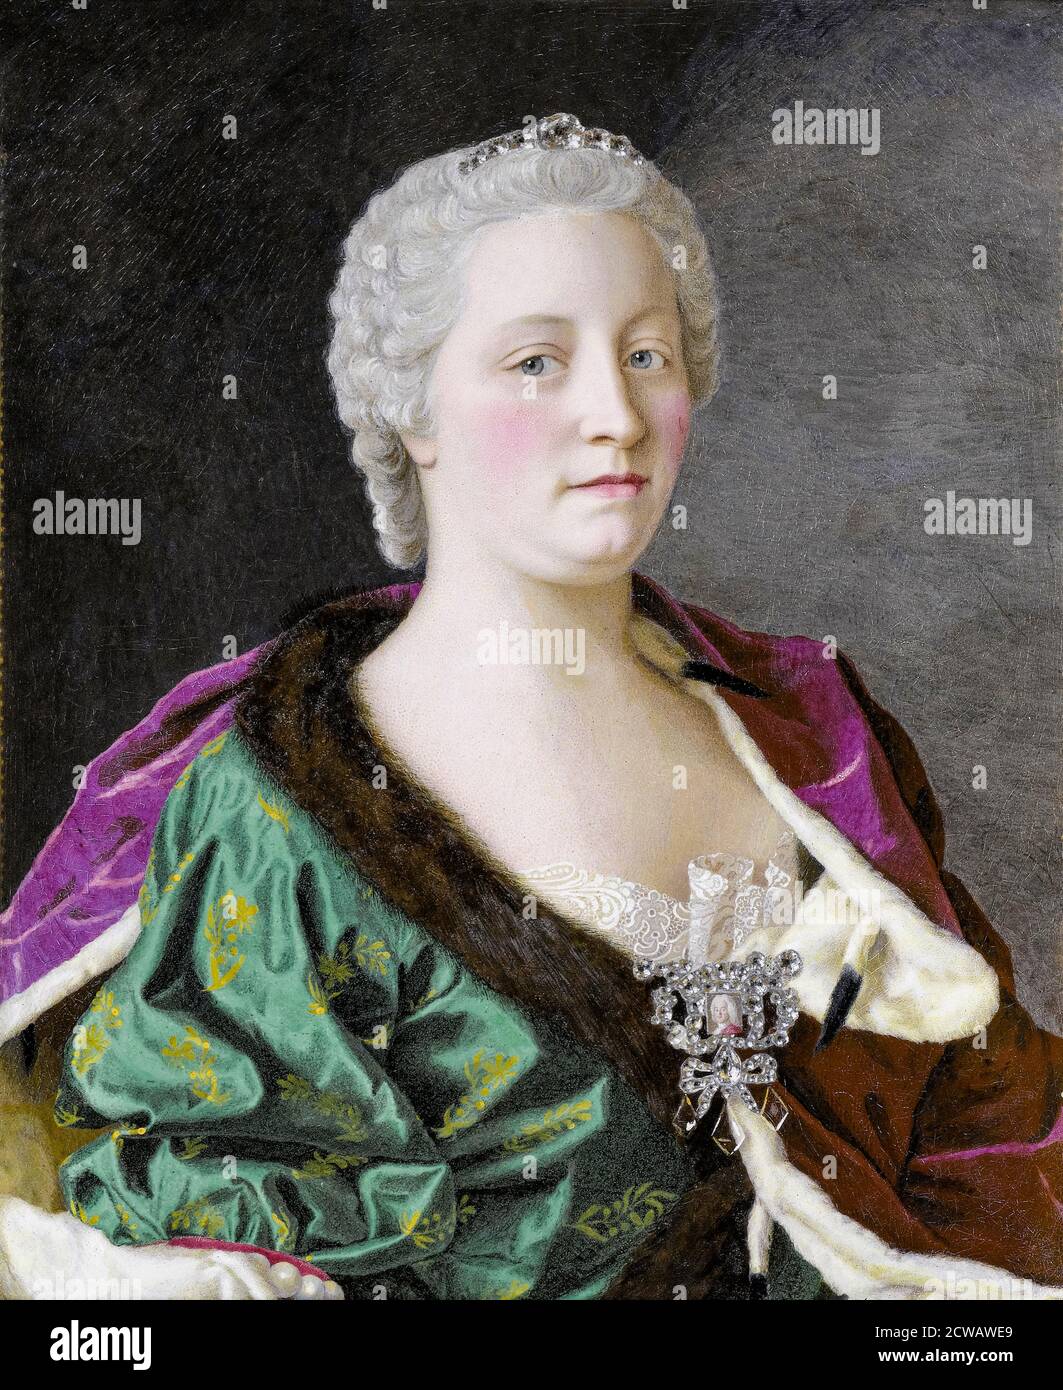 Maria Teresa (1717-1780), Arciduchessa d'Austria, Regina d'Ungheria e Boemia, Imperatrice Sacra Romana, ritratto in miniatura di Jean-Etienne Liotard, 1747 Foto Stock